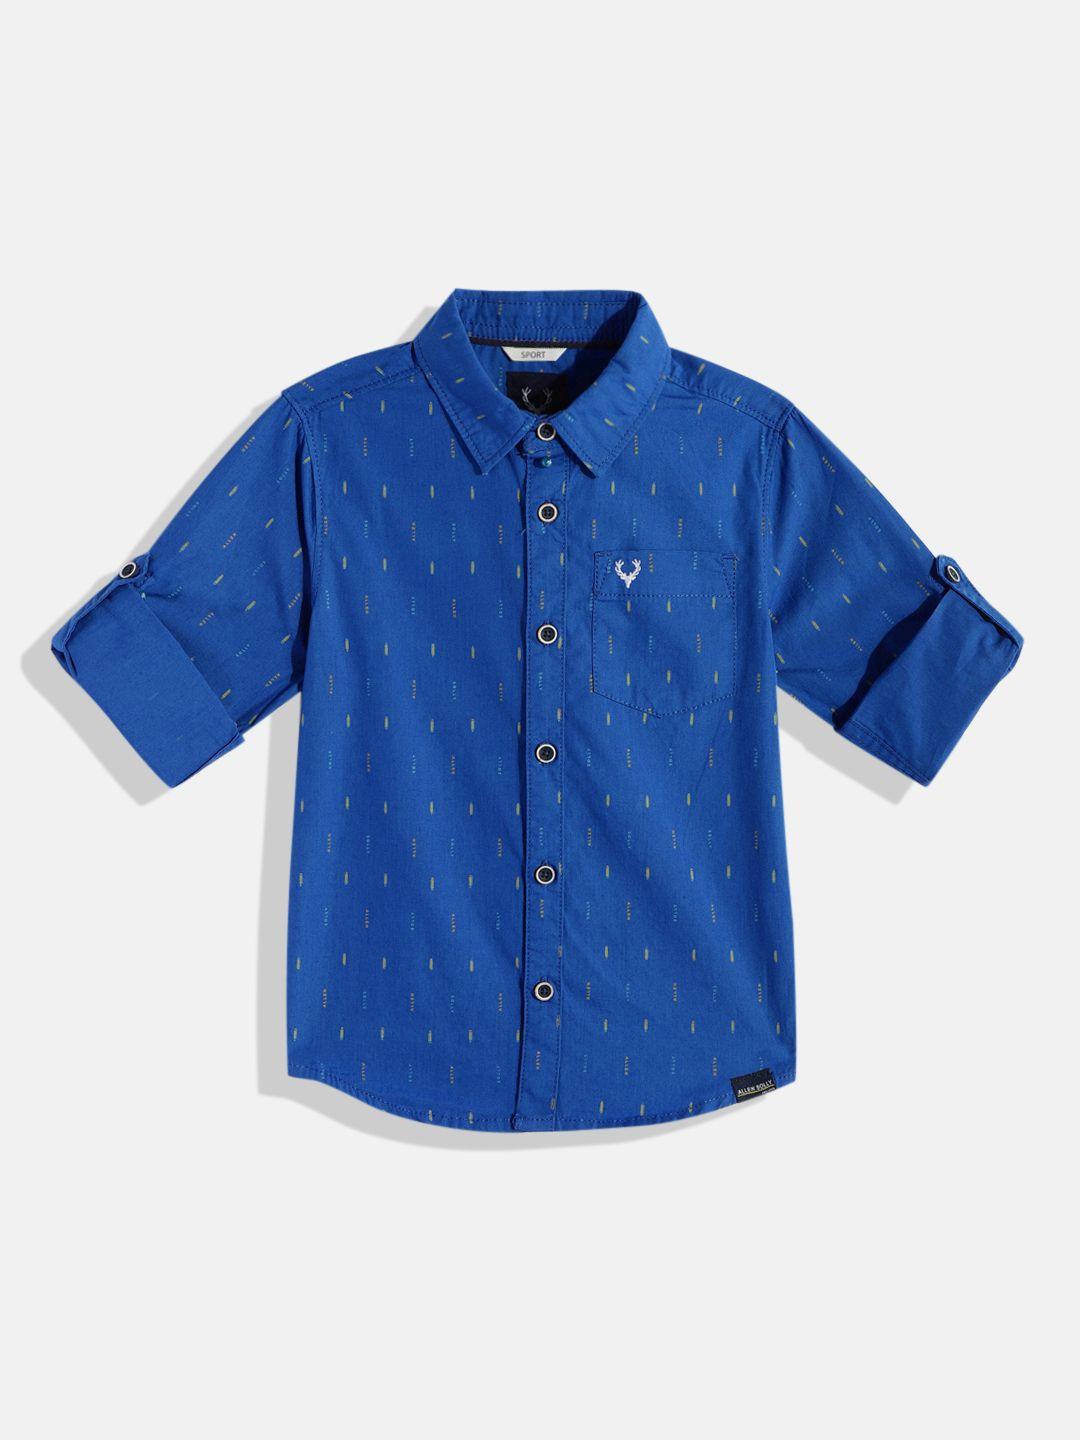 allen solly junior boys blue micro ditsy opaque printed pure cotton casual shirt